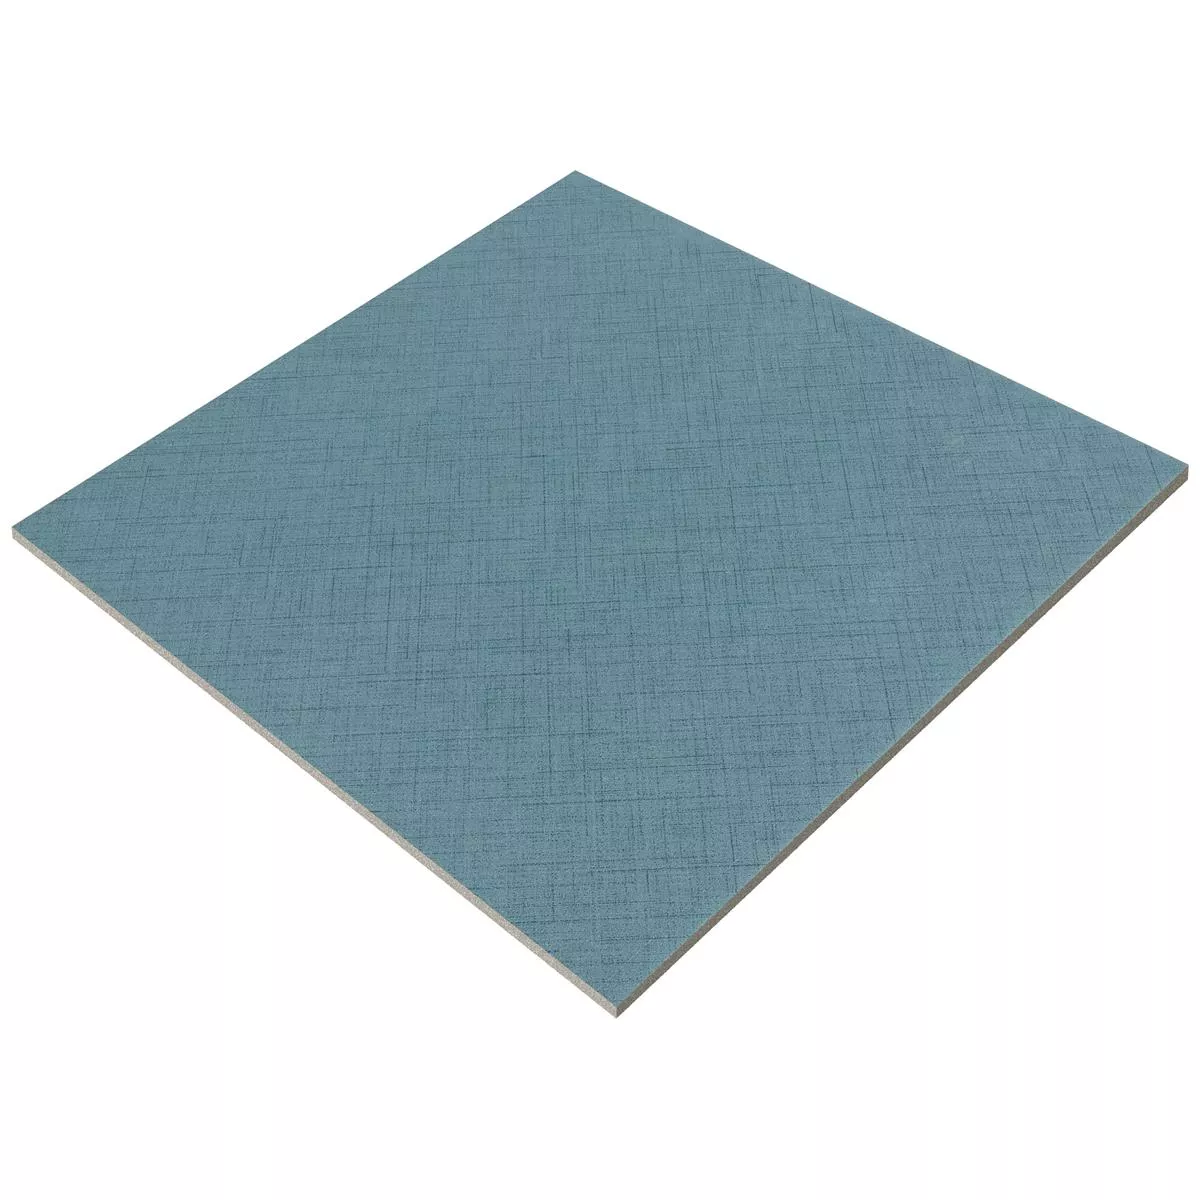 Vzorek Podlahové Dlaždice Flowerfield 18,5x18,5cm Modrá Základní Dlaždice